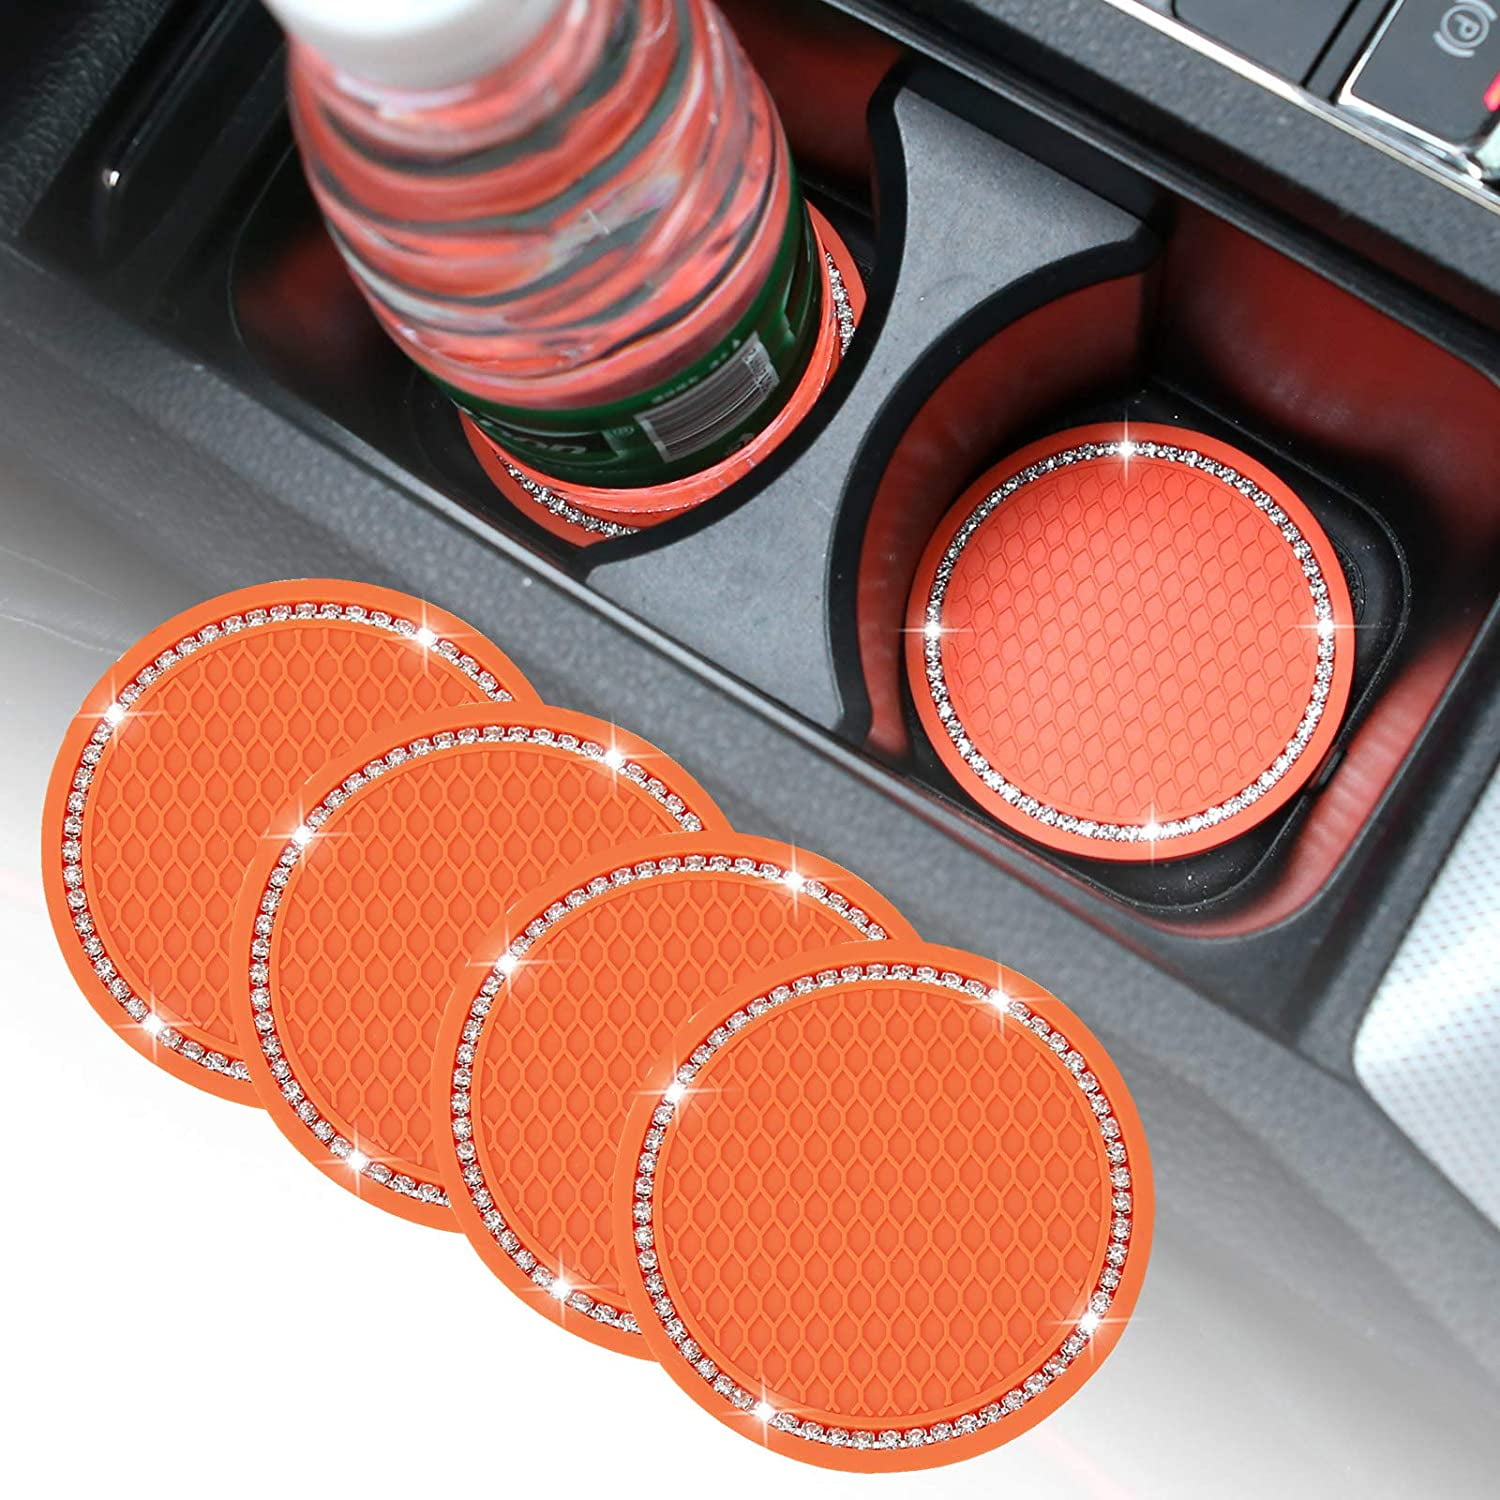 Car Coasters Universal Anti Slip Silicone Car Cup Holder Crystal Rhinestone Coaster  Car Interior Accessories(8pcs, Black)